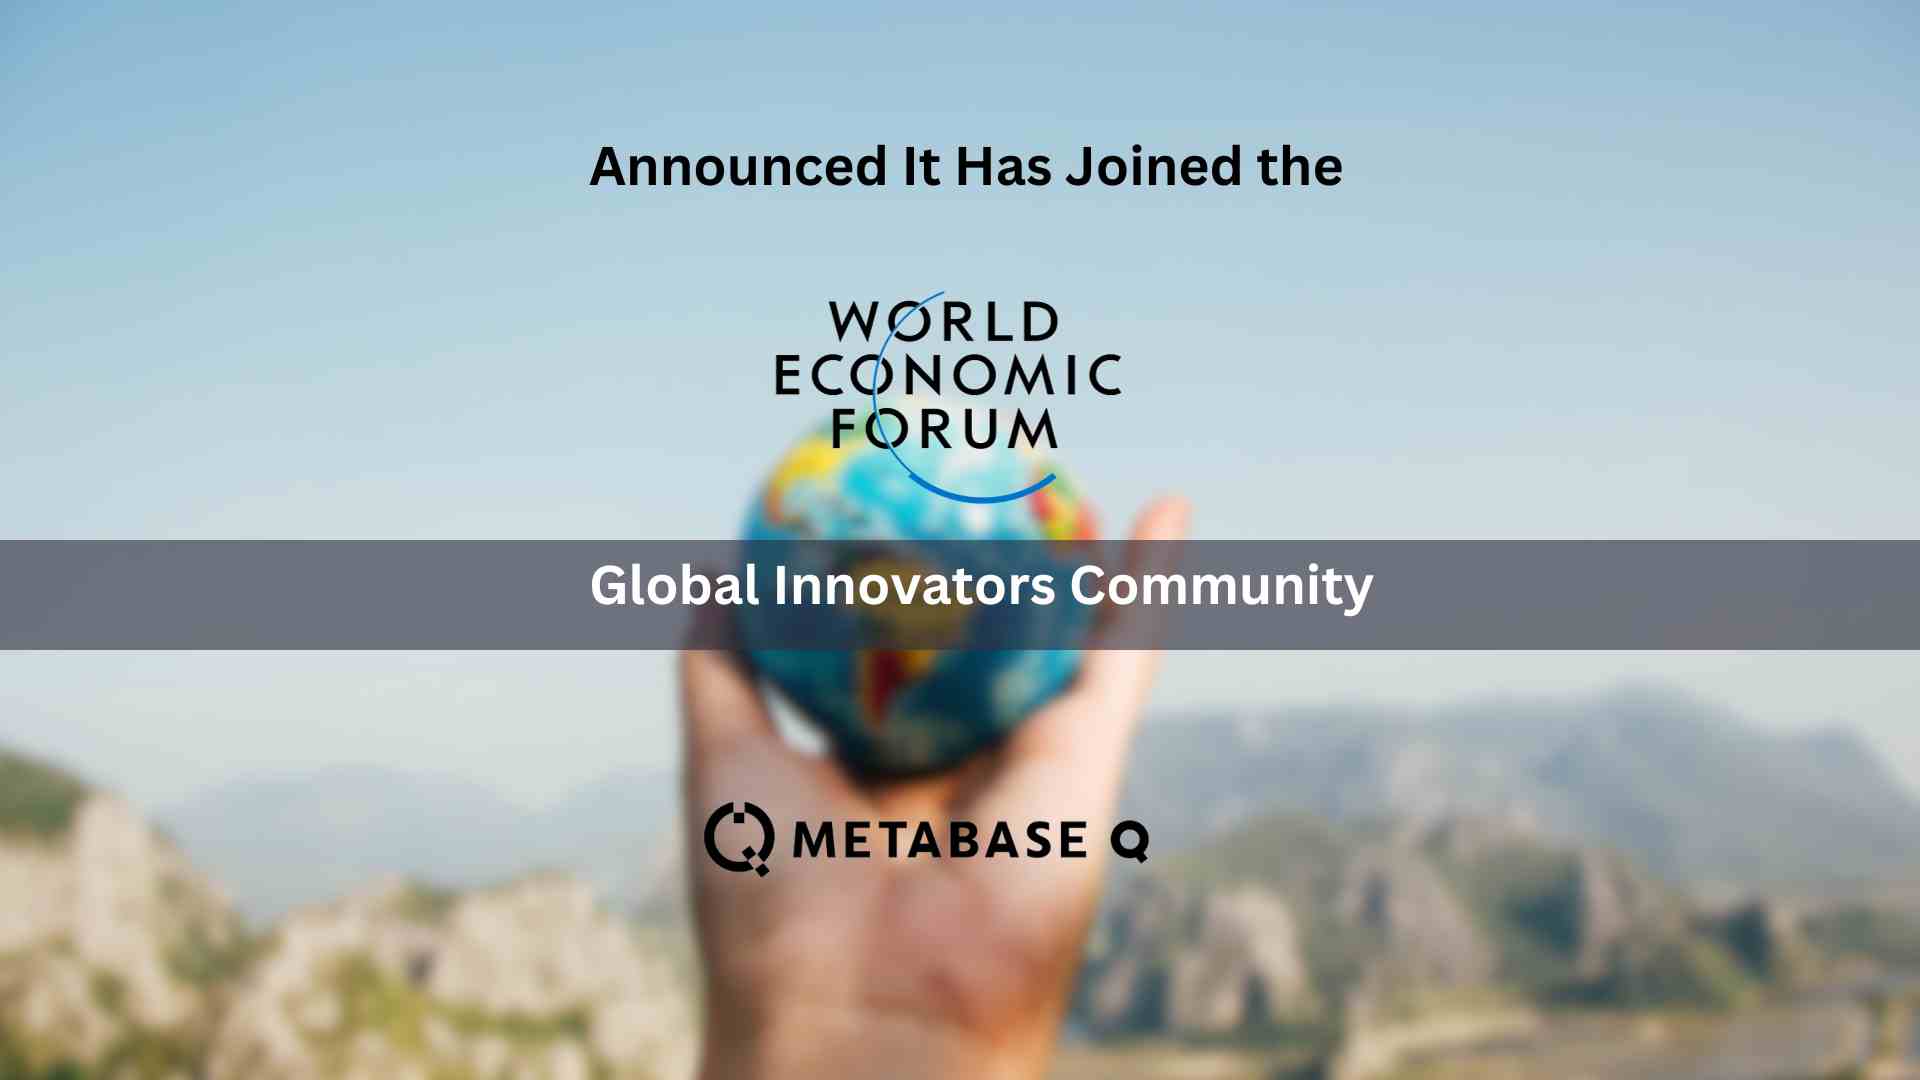 Metabase Q Joins World Economic Forum Global Innovators Community